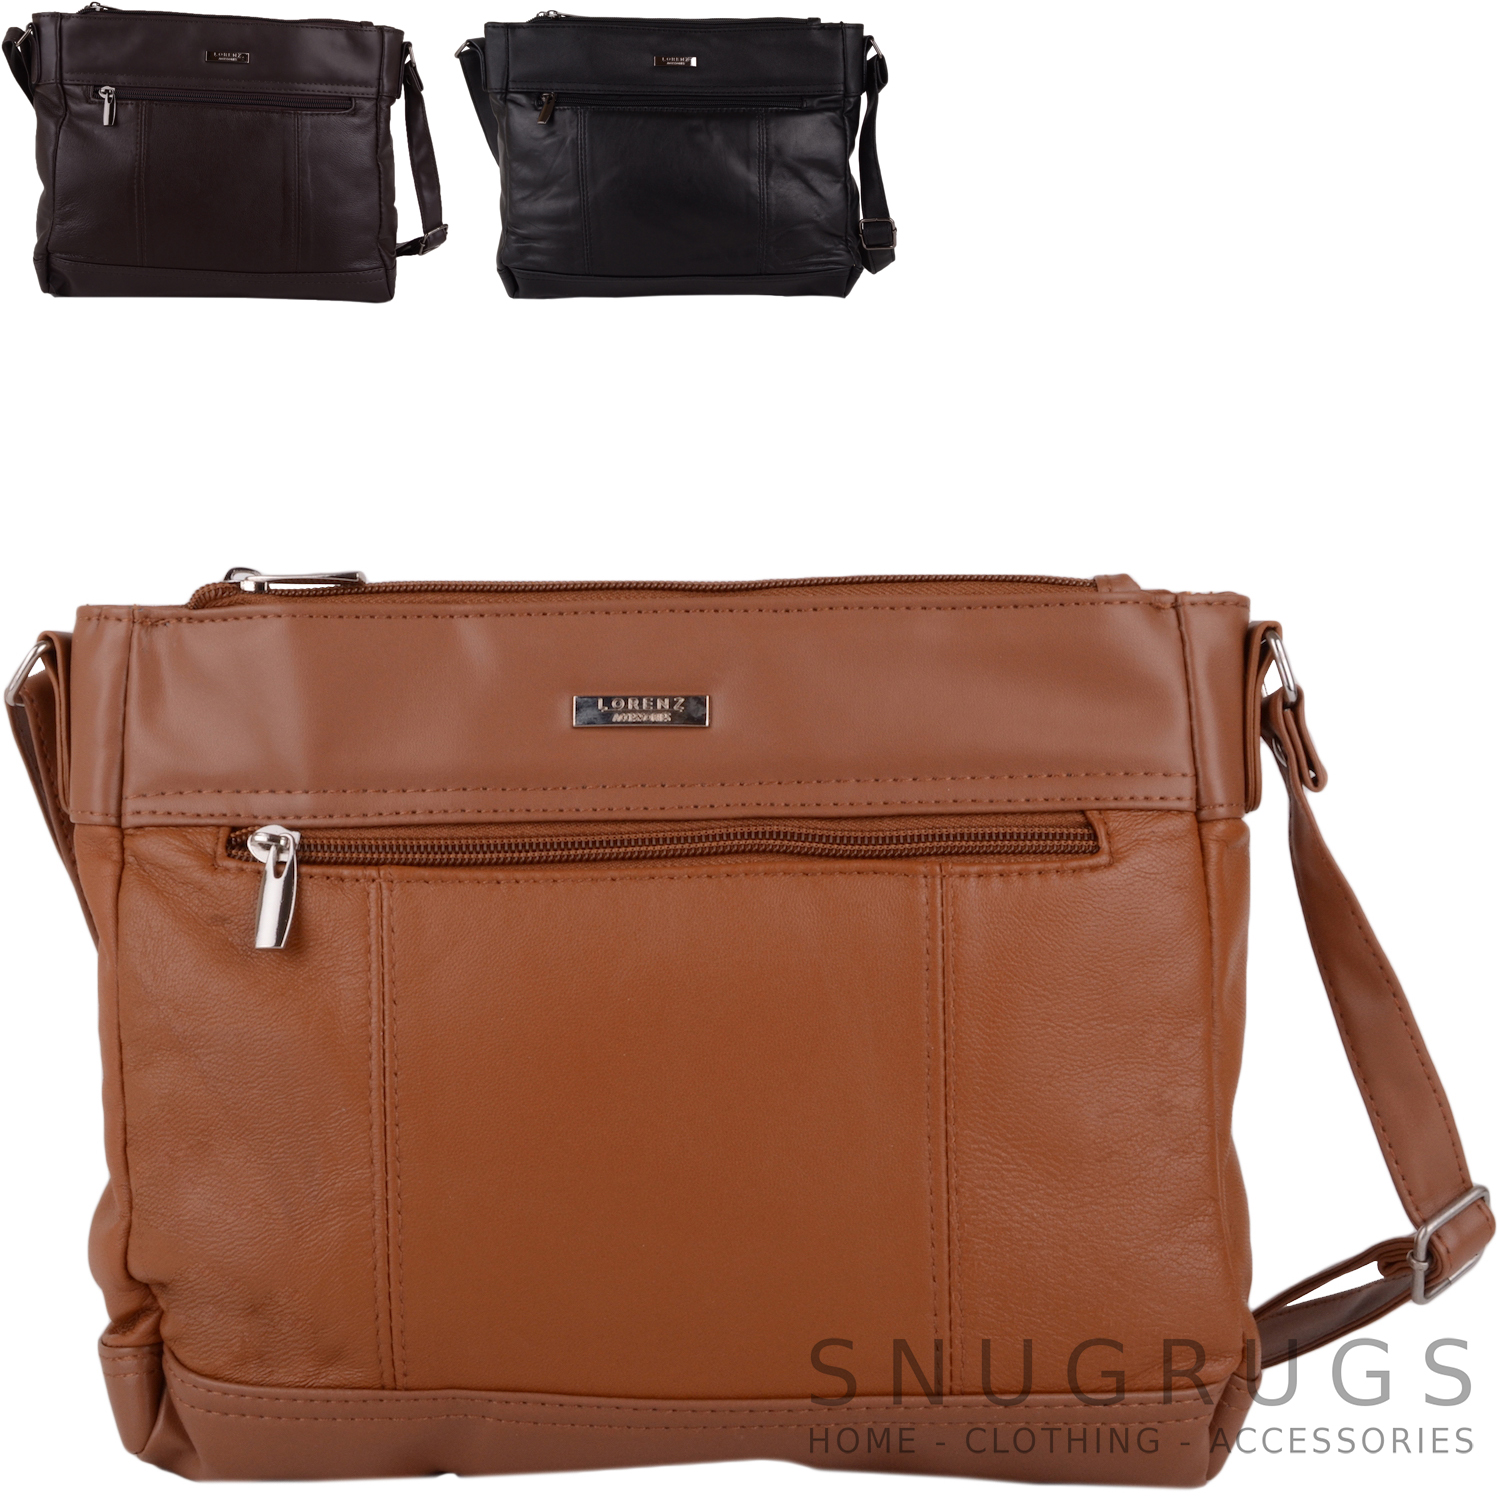 Ladies / Womens Soft Leather Handbag / Shoulder / Organiser / Cross Body Bag | eBay